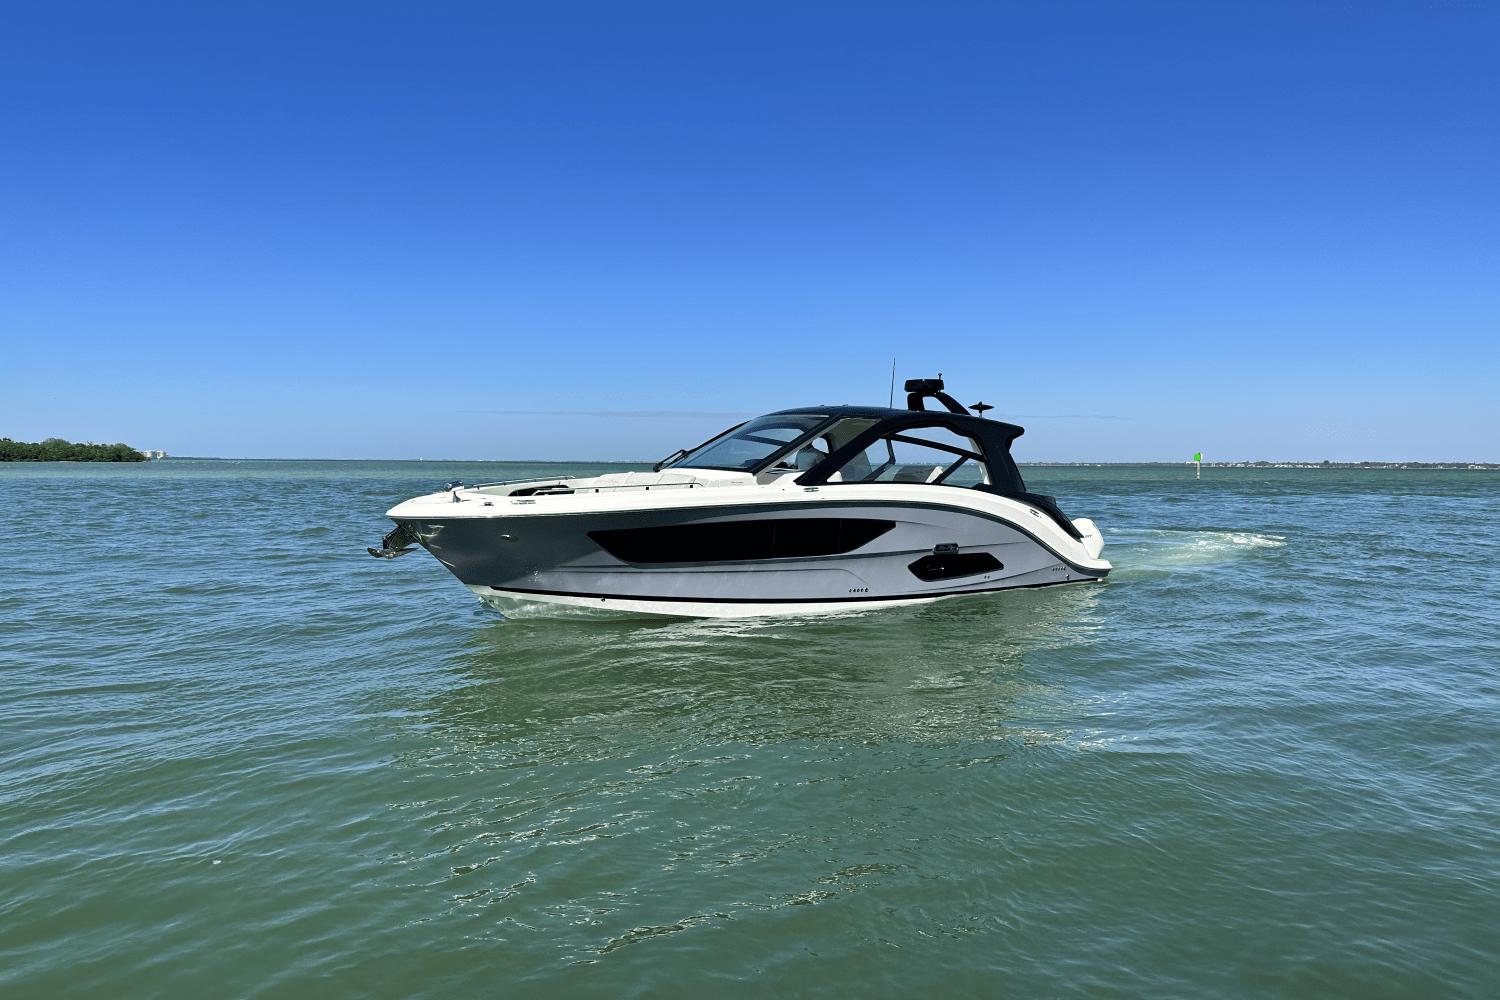 2023 Sea Ray 370 Sundancer Outboard Sports Cruiser for sale - YachtWorld